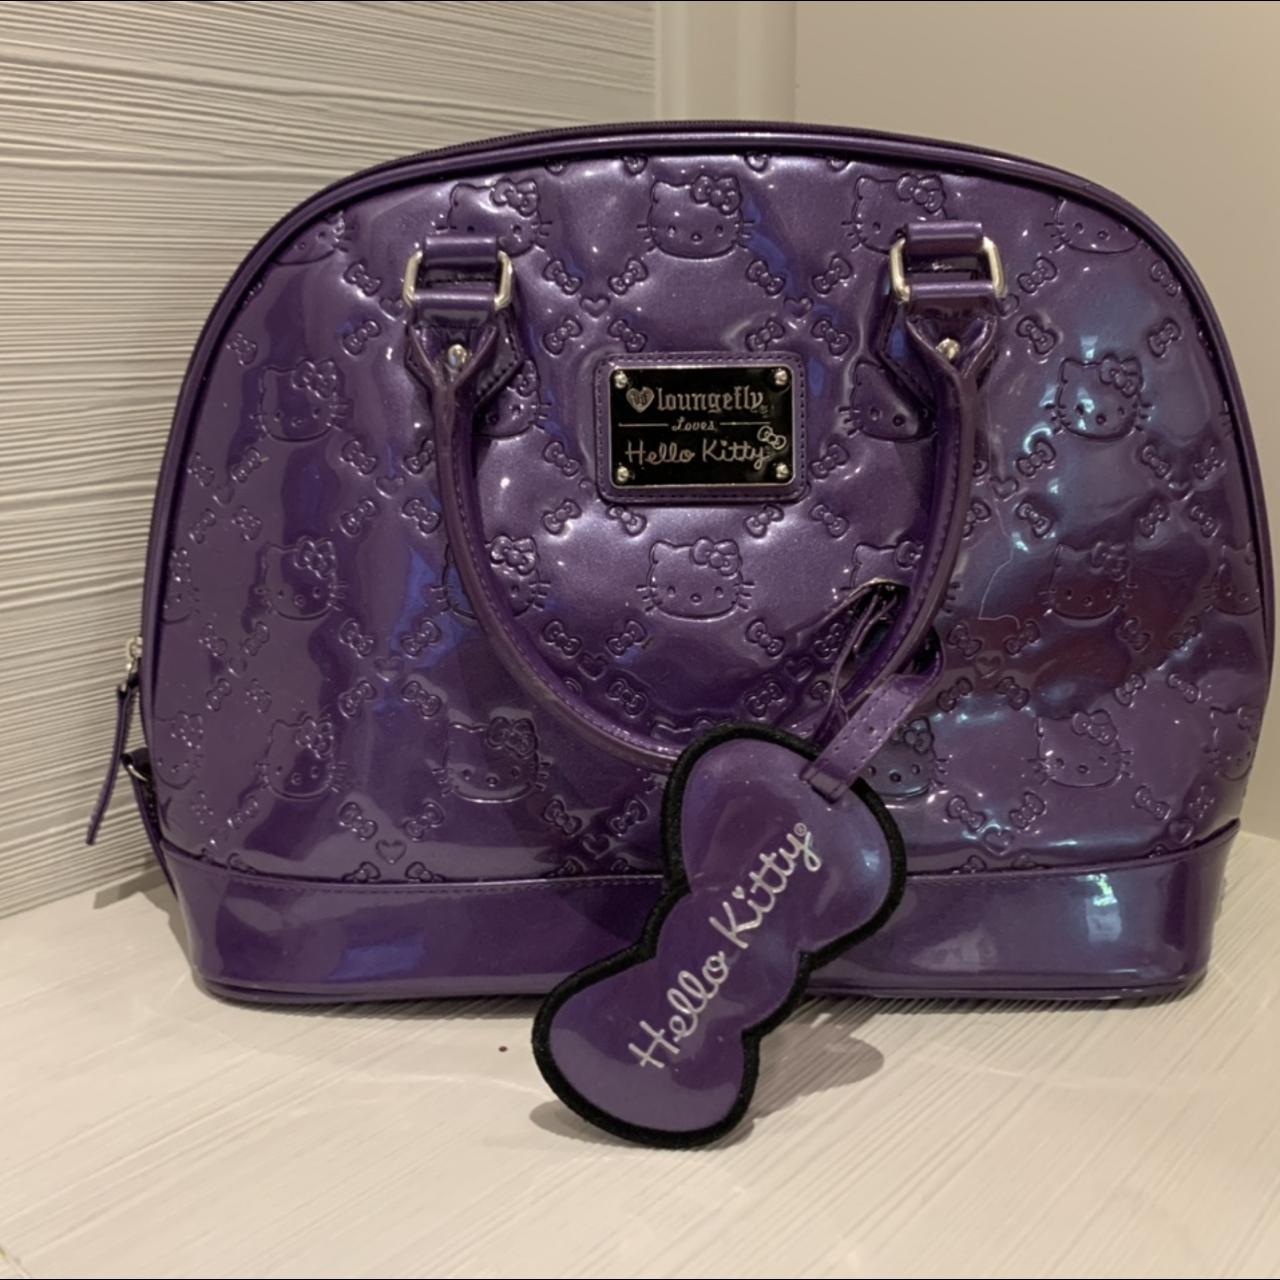 Sanrio Hello Kitty New Bags Women Luxury Handbag PU Large Capacity